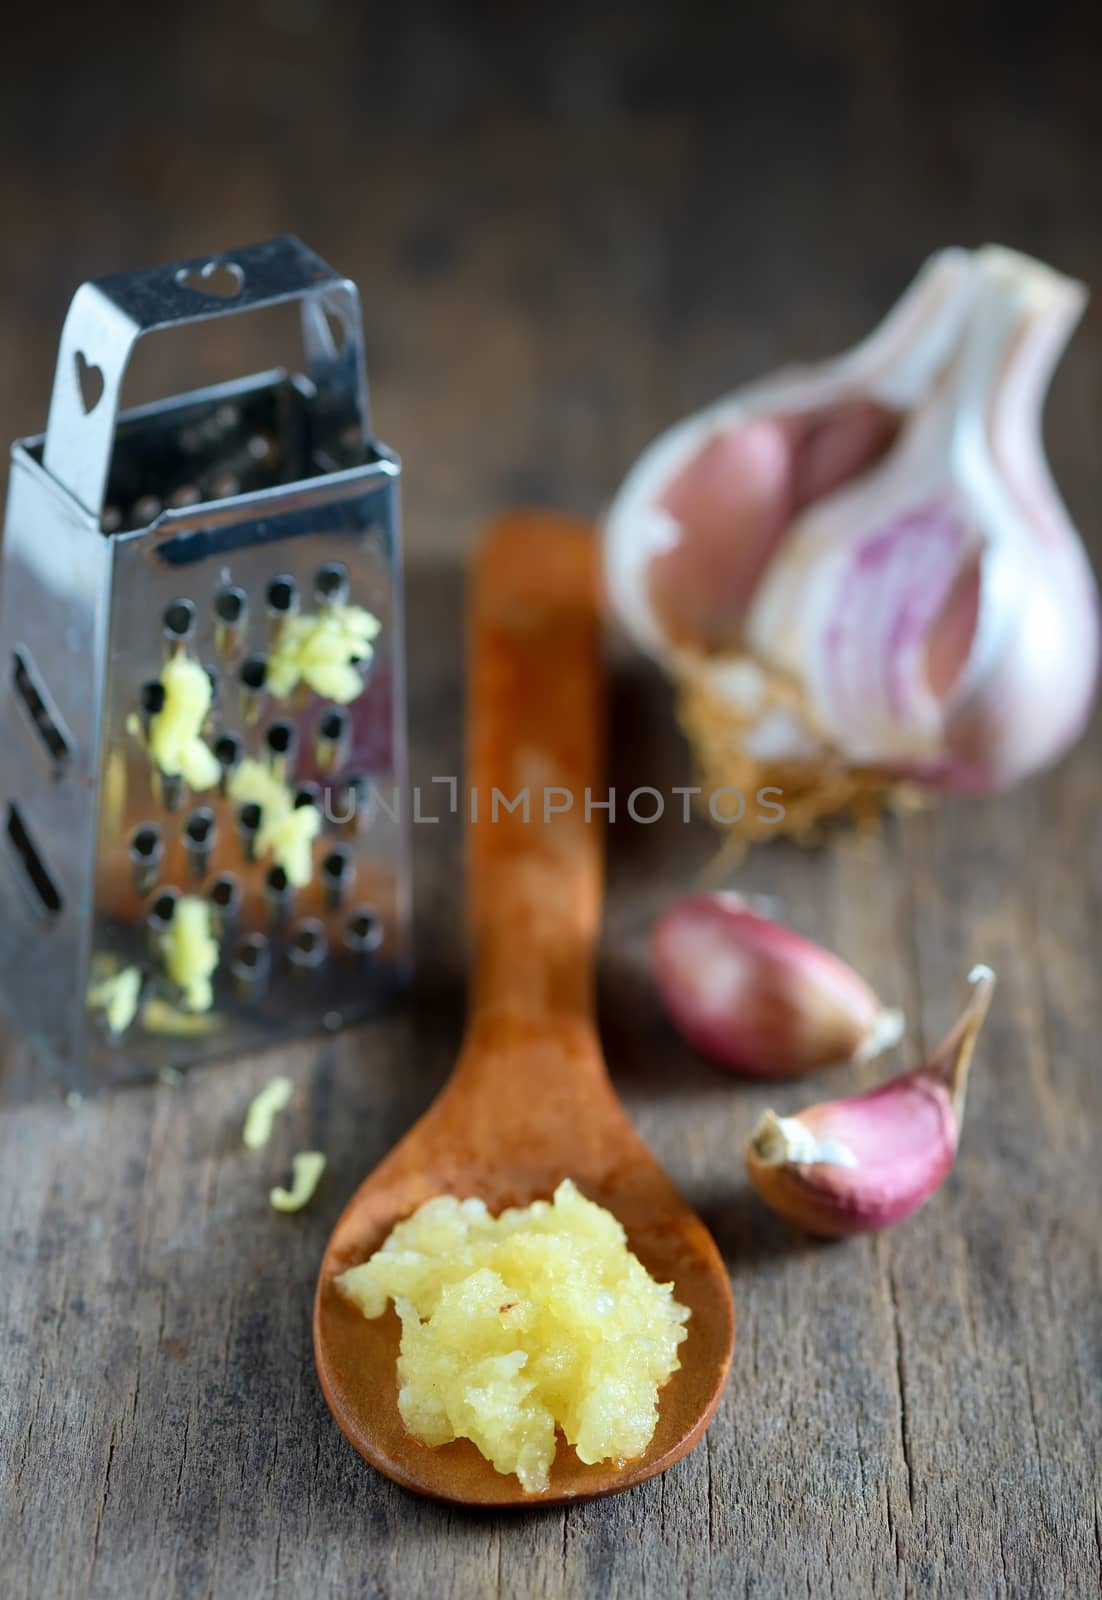 Garlic in spoon on wooden background